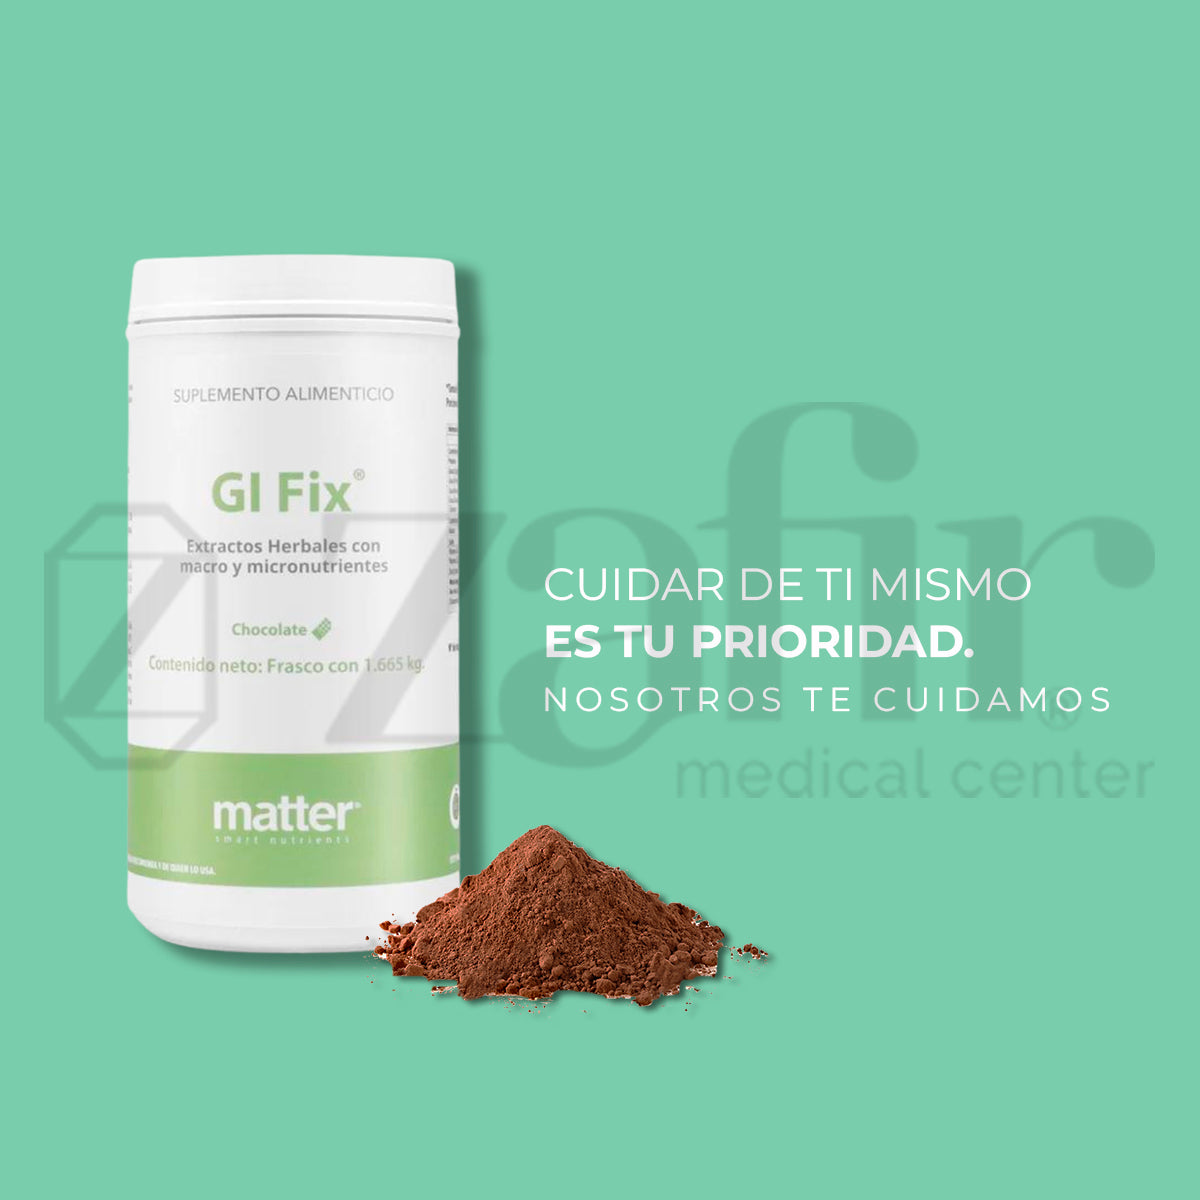 GI Fix proteína Matter en polvo (chocolate) 1665 kg – Zafir Medical Center